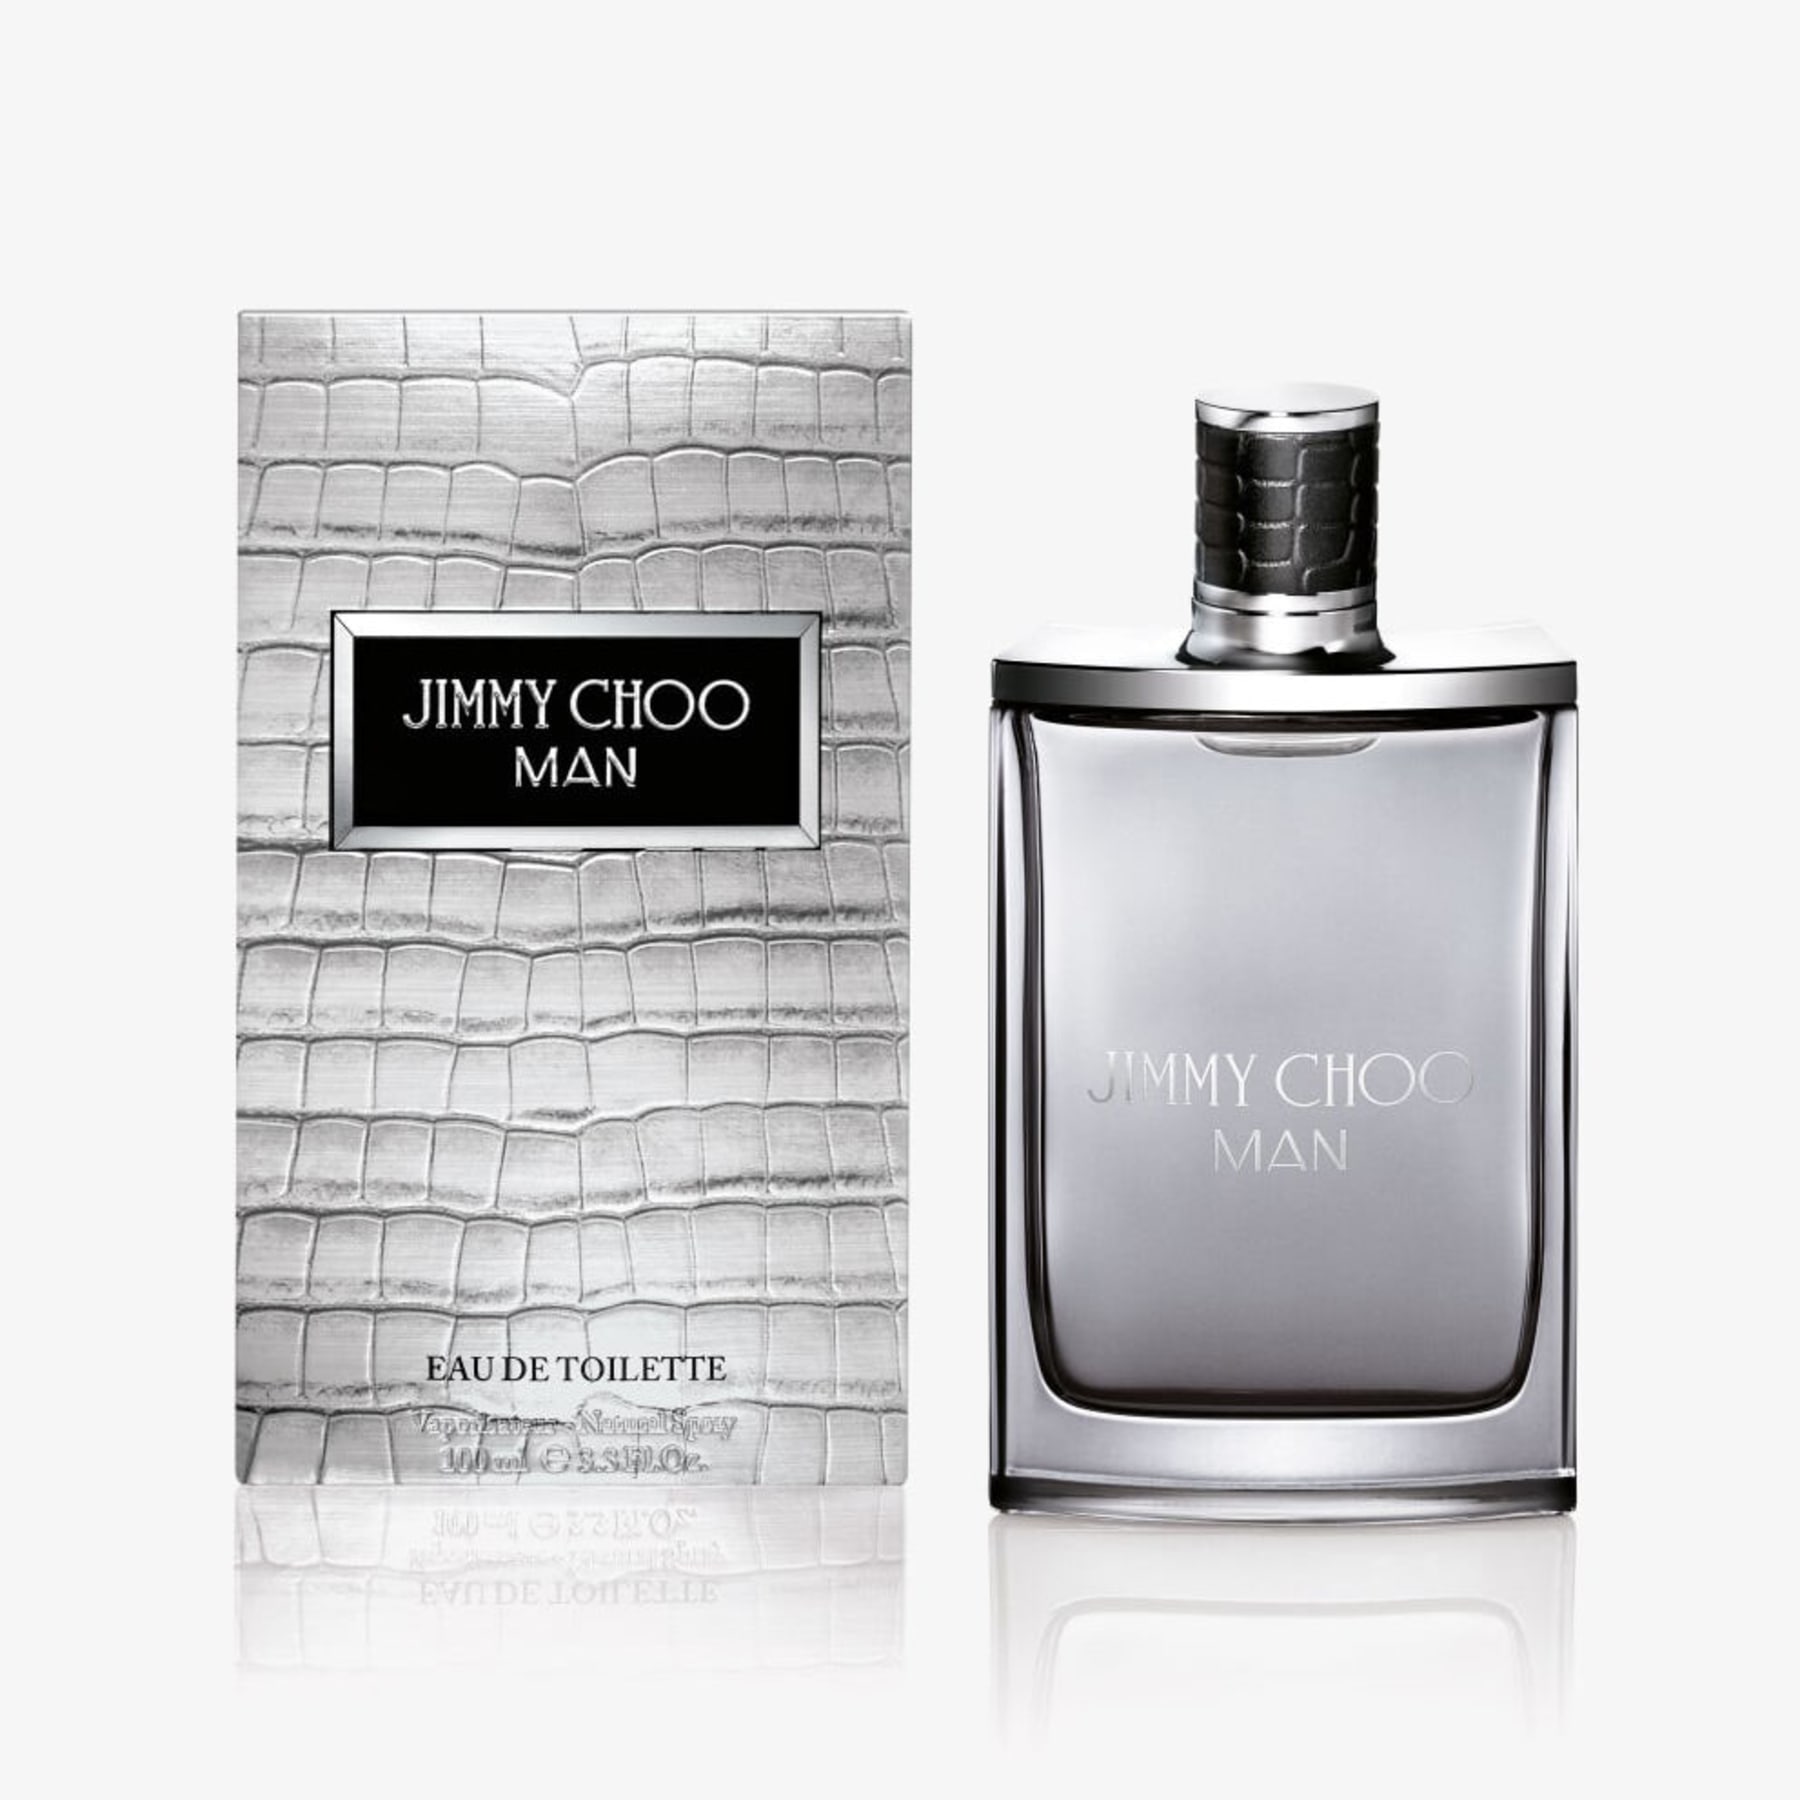 Jimmy Choo | Jimmy Choo Eau de Parfum - REBL